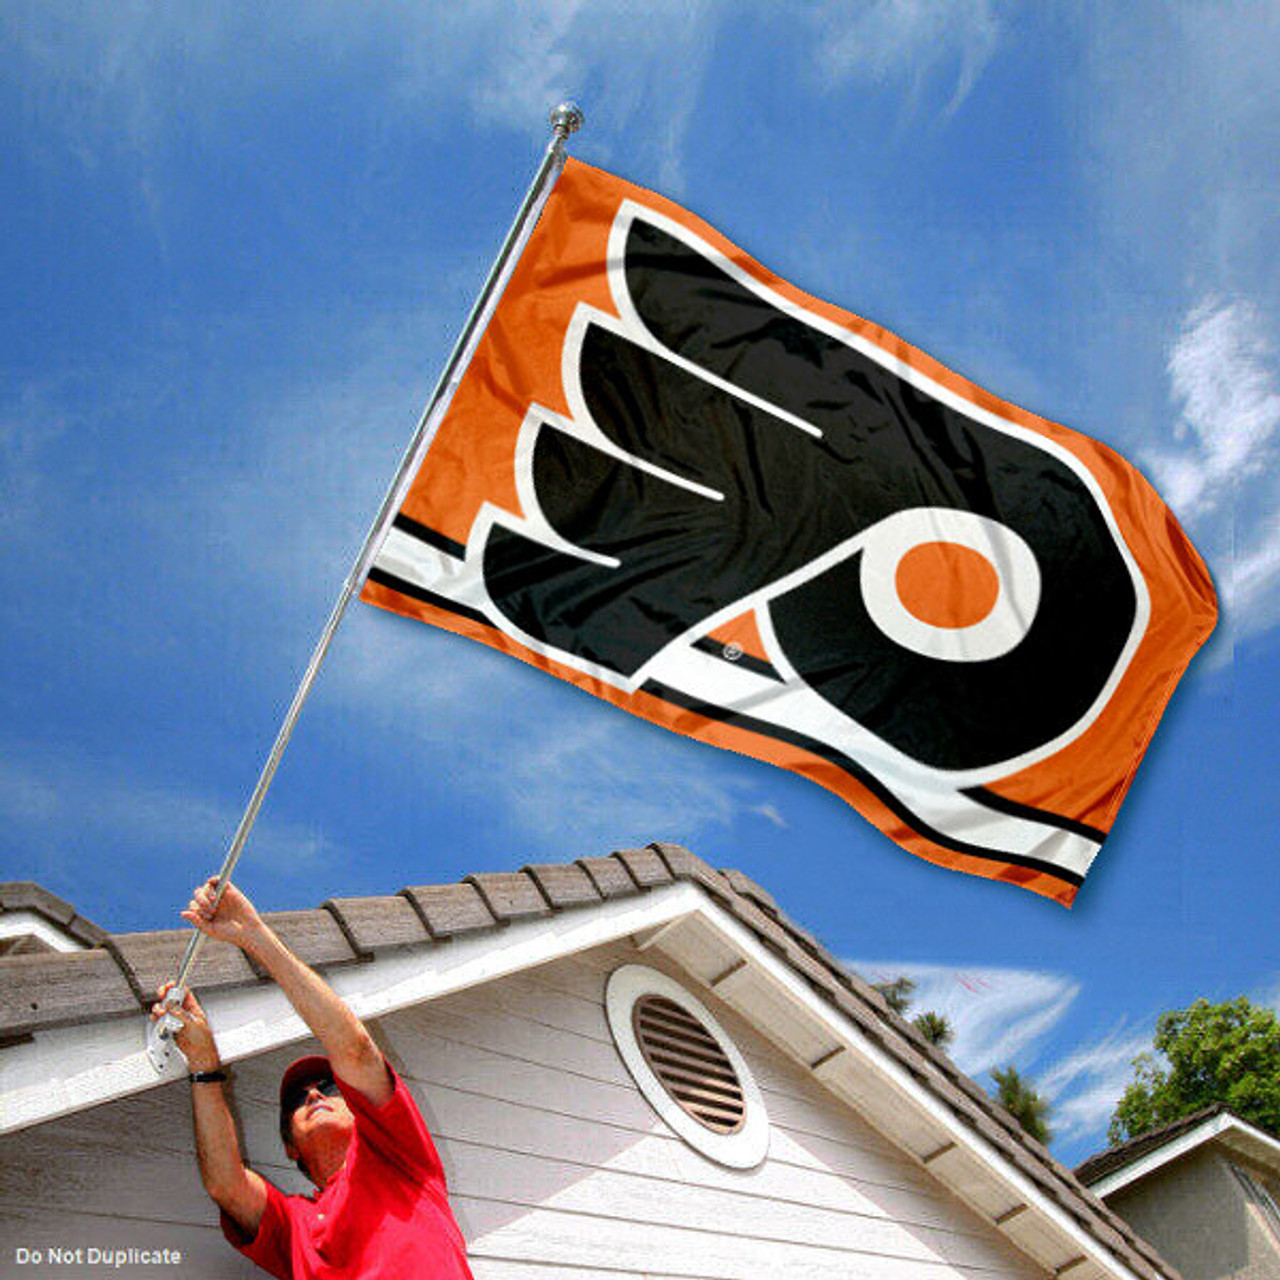 Philadelphia Flyers Flag, Flyers Banners, Pennants